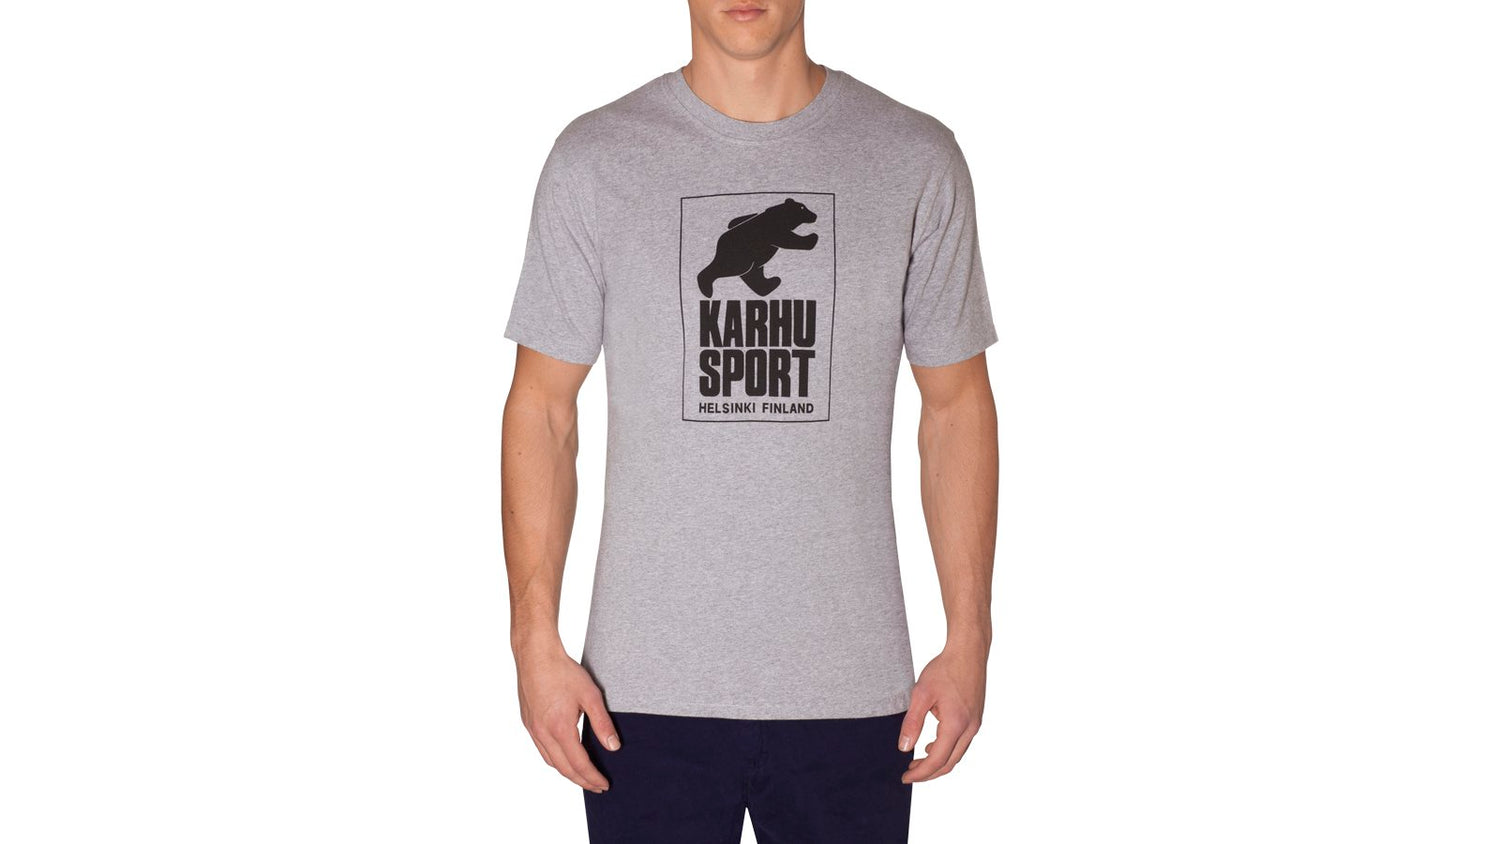 Karhu helsinki sport t-shirt heather grey black logo